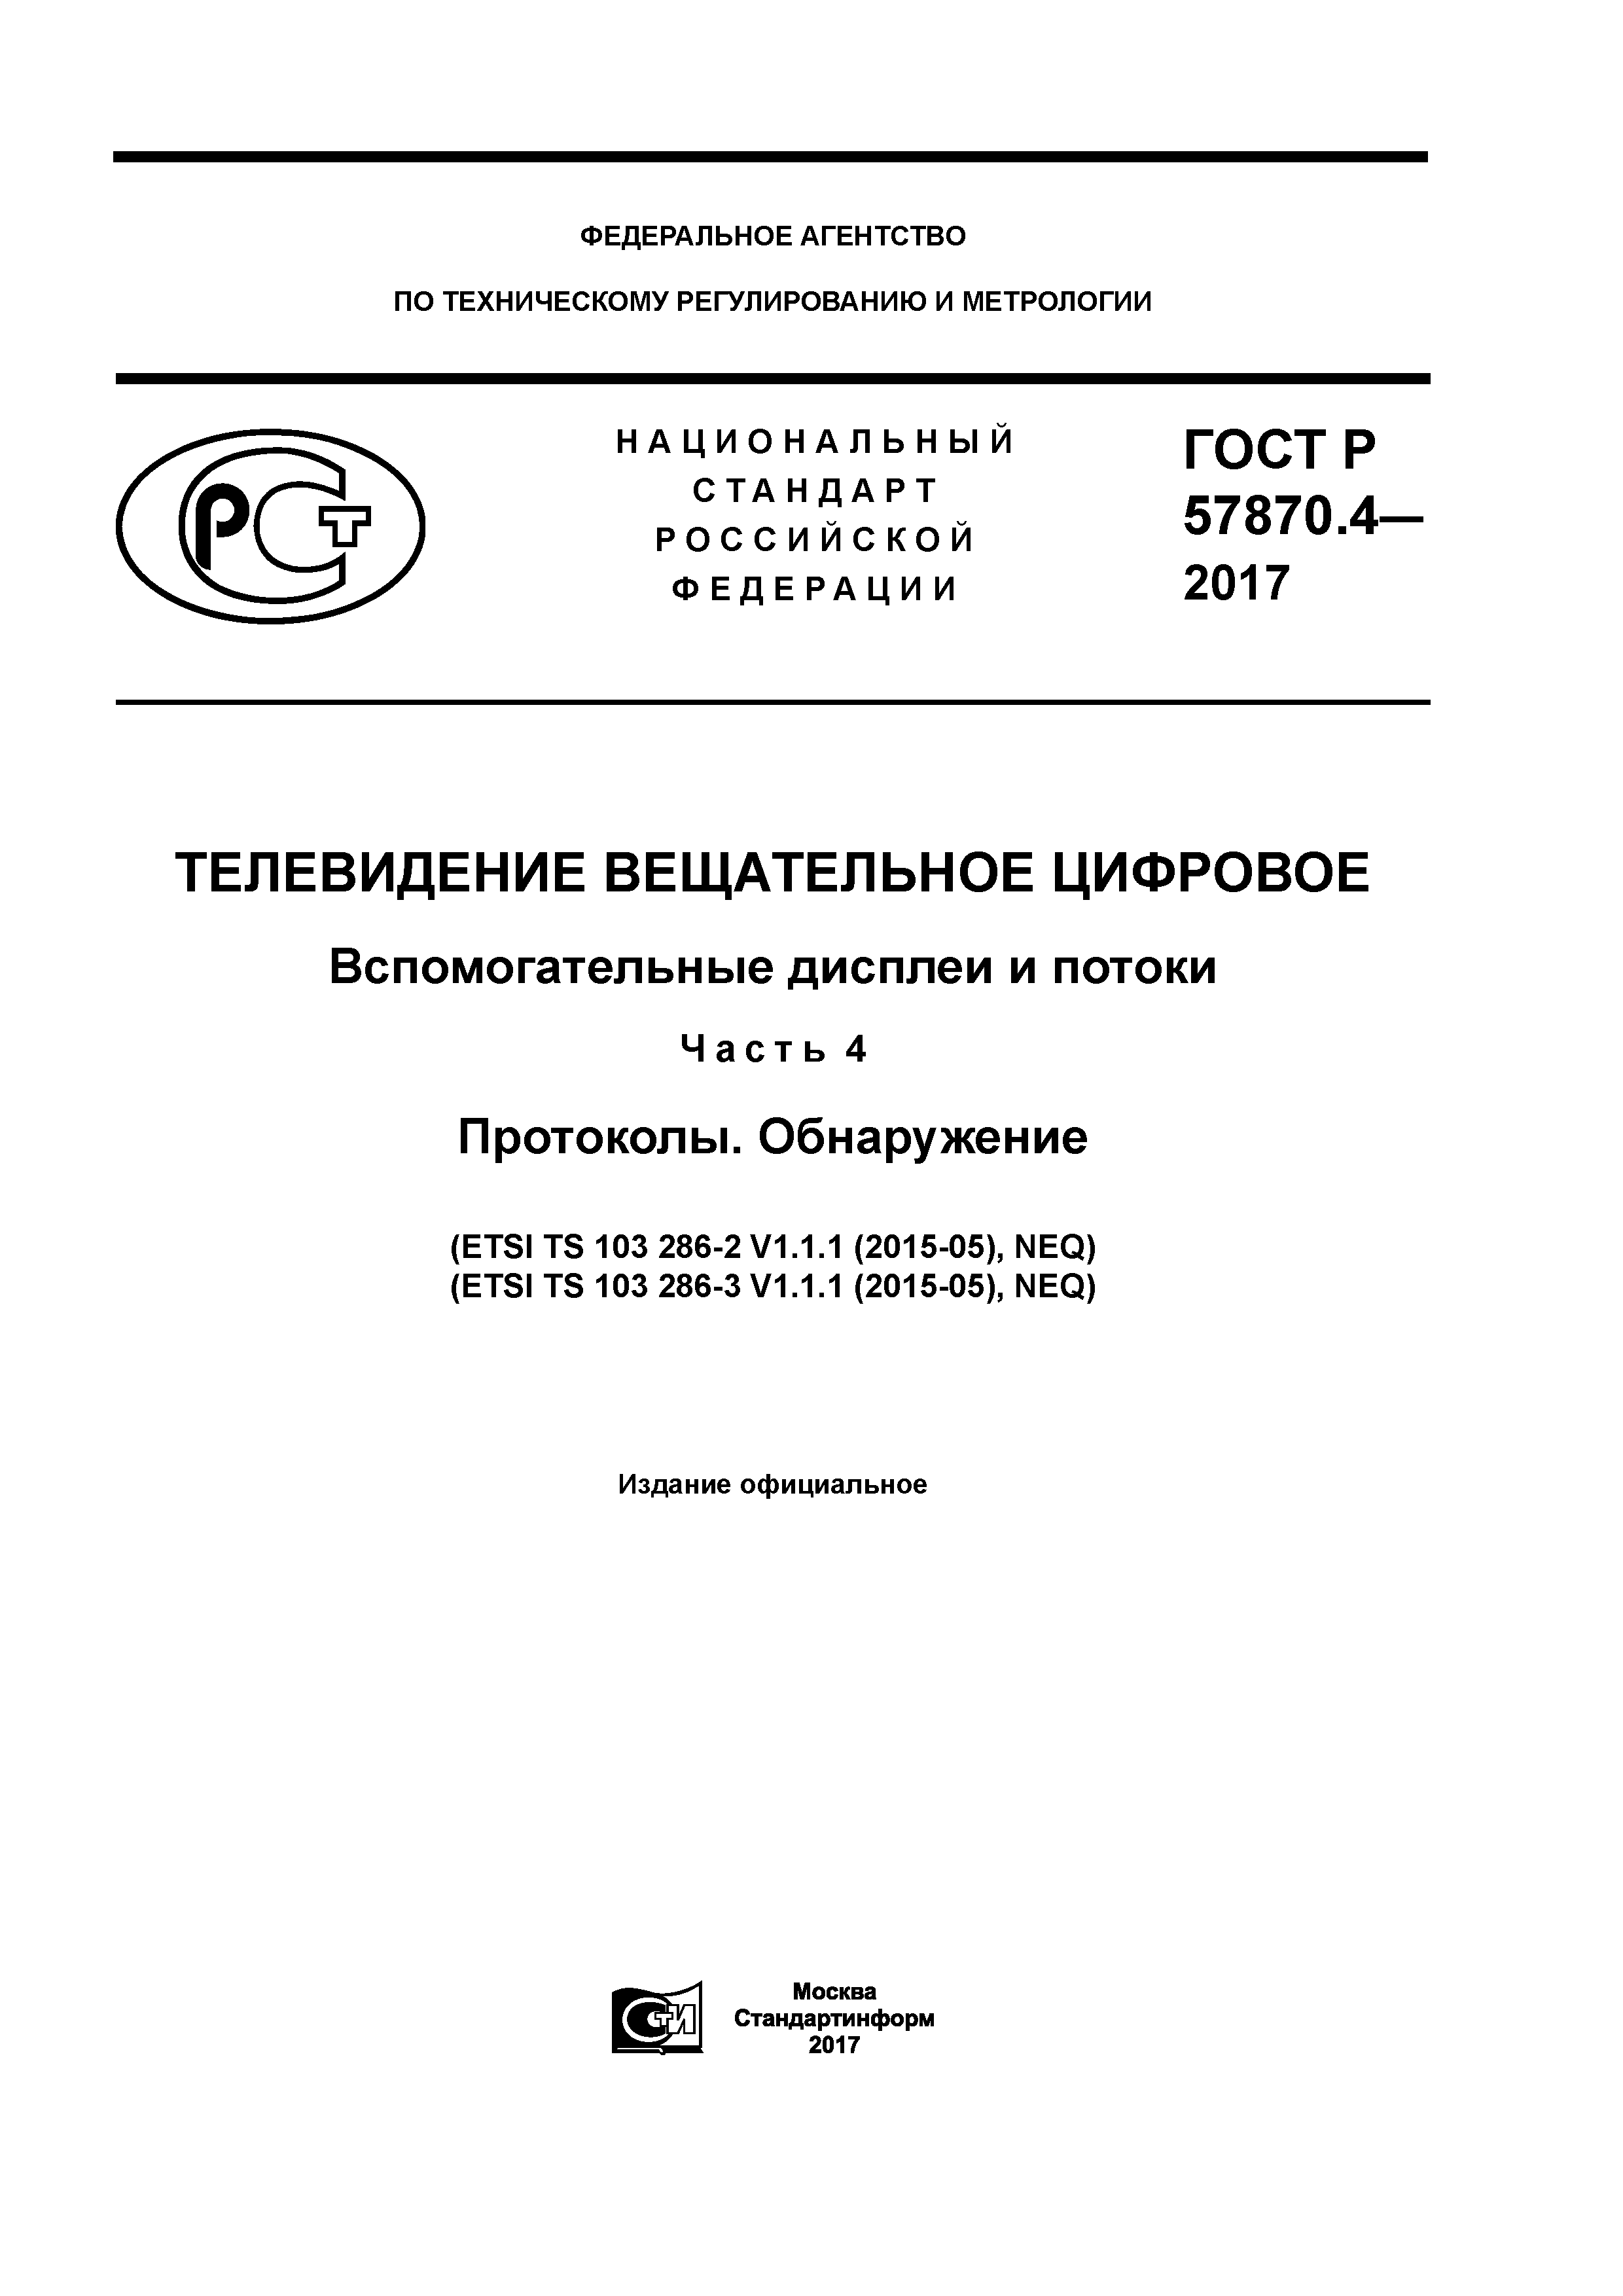 ГОСТ Р 57870.4-2017